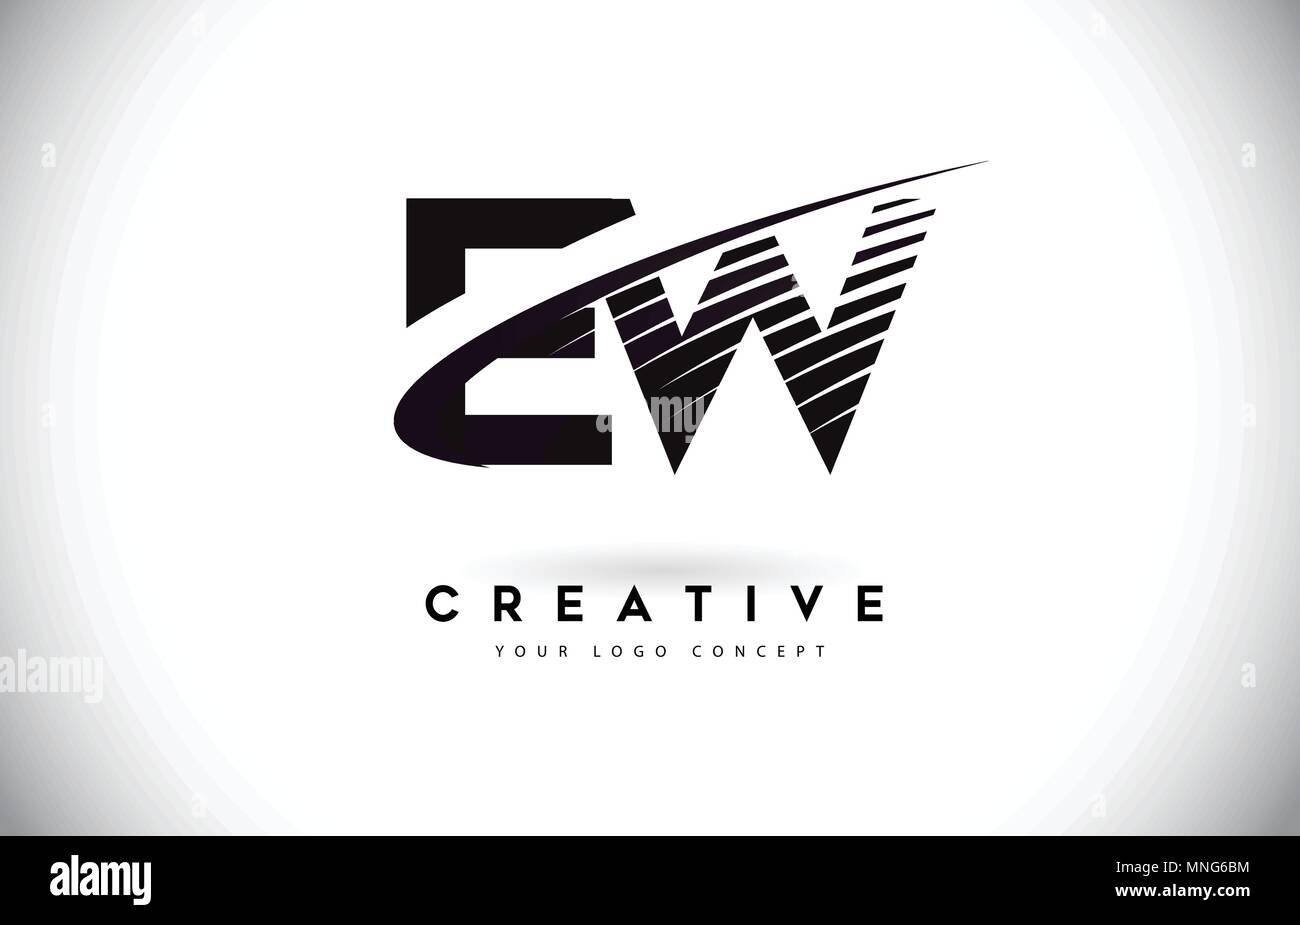 Ew E W Carta Con Diseno De Logotipo Swoosh Y Lineas Negras